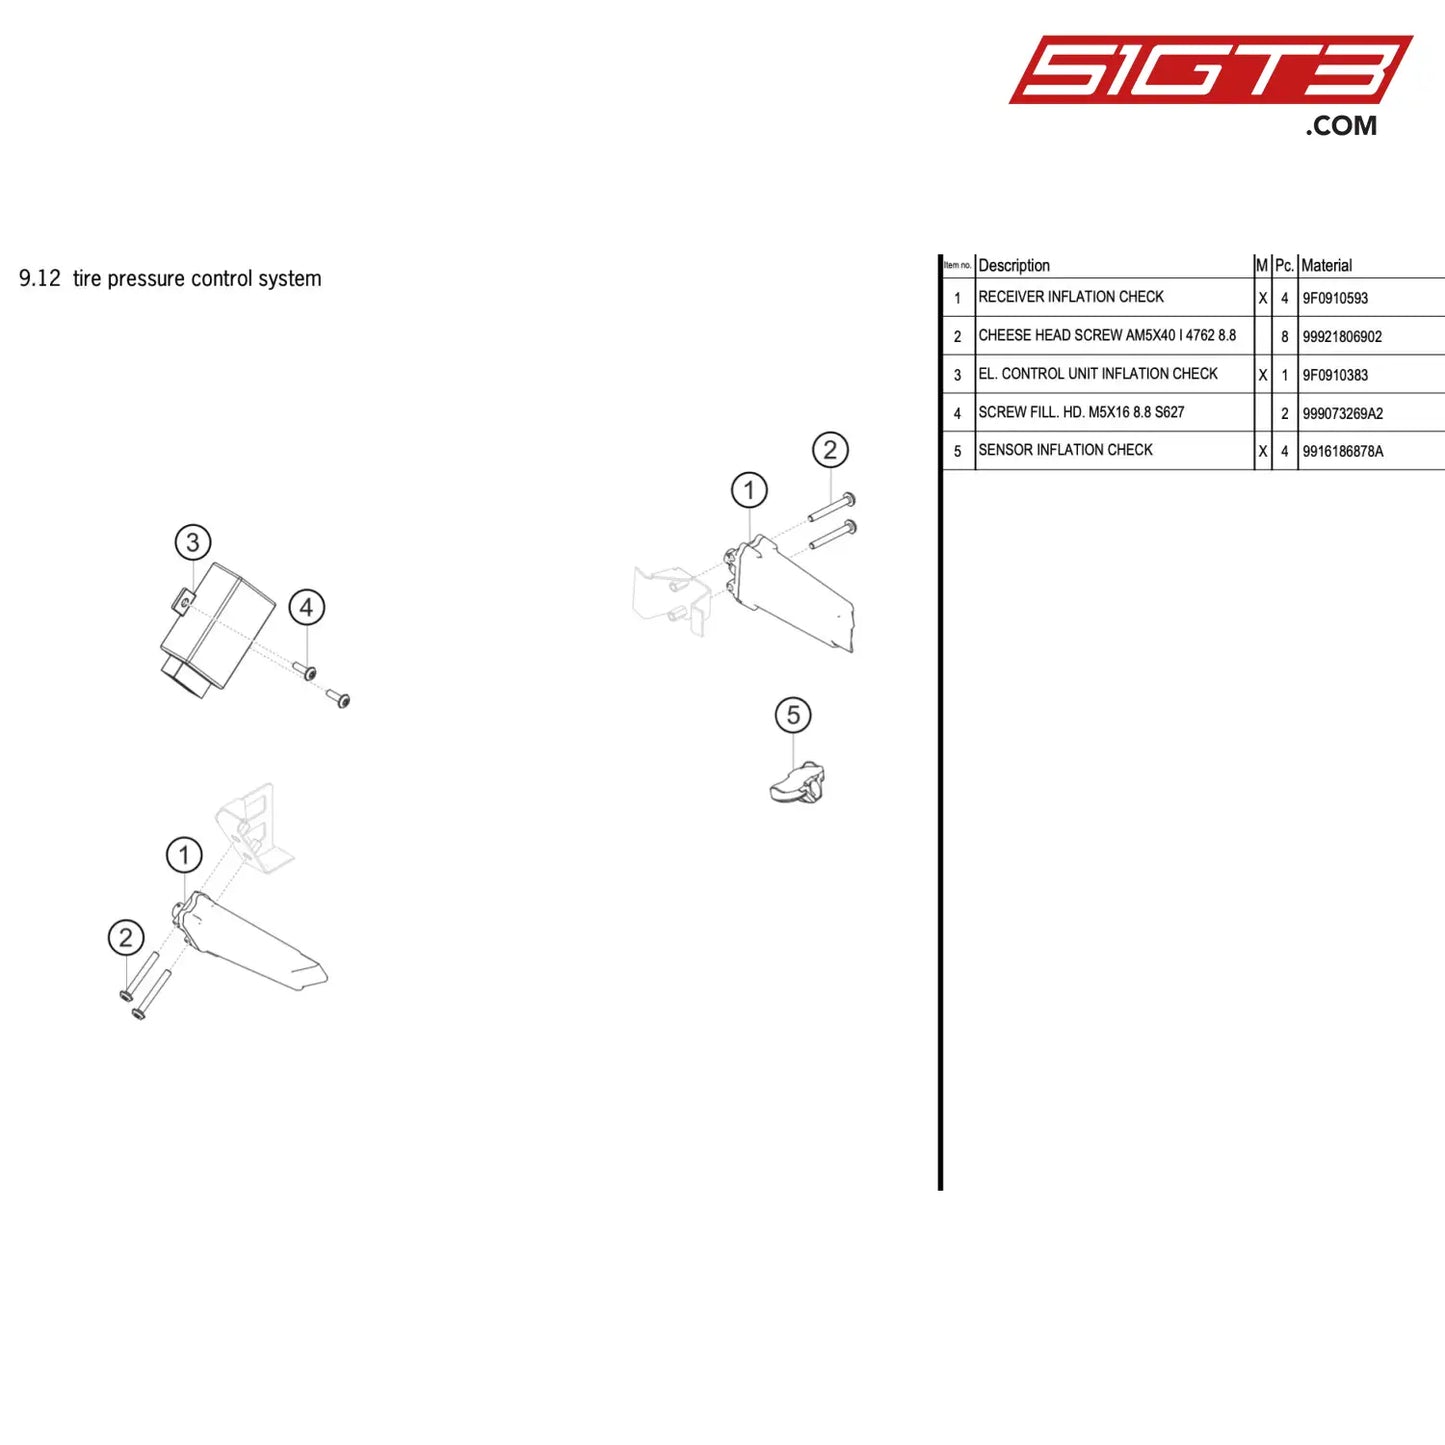 Sensor Inflation Check - 9916186878A [Porsche 911 Gt3 R Type 991 (Gen 2)] Tire Pressure Control